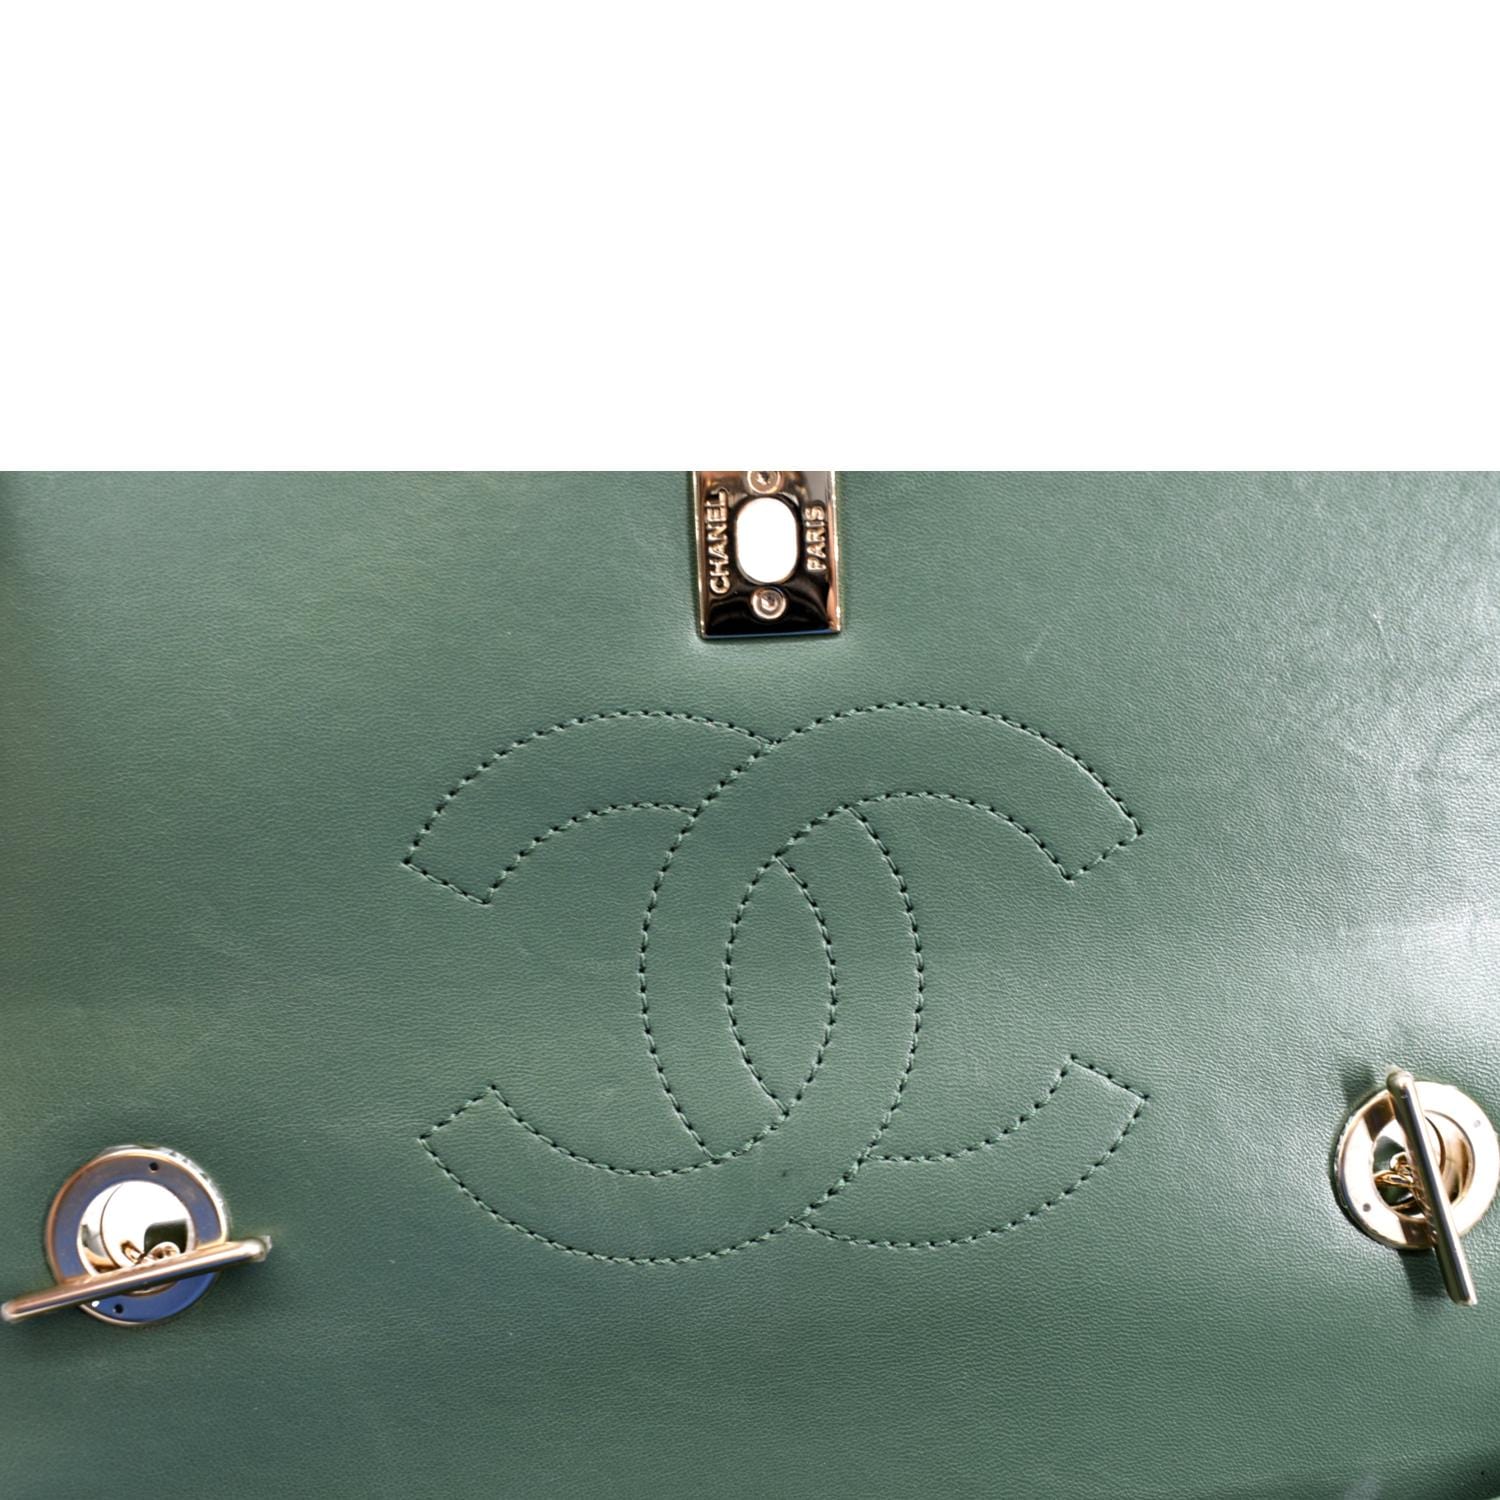 Chanel Classic Medium Chevron Double Flap Bag - Light Green